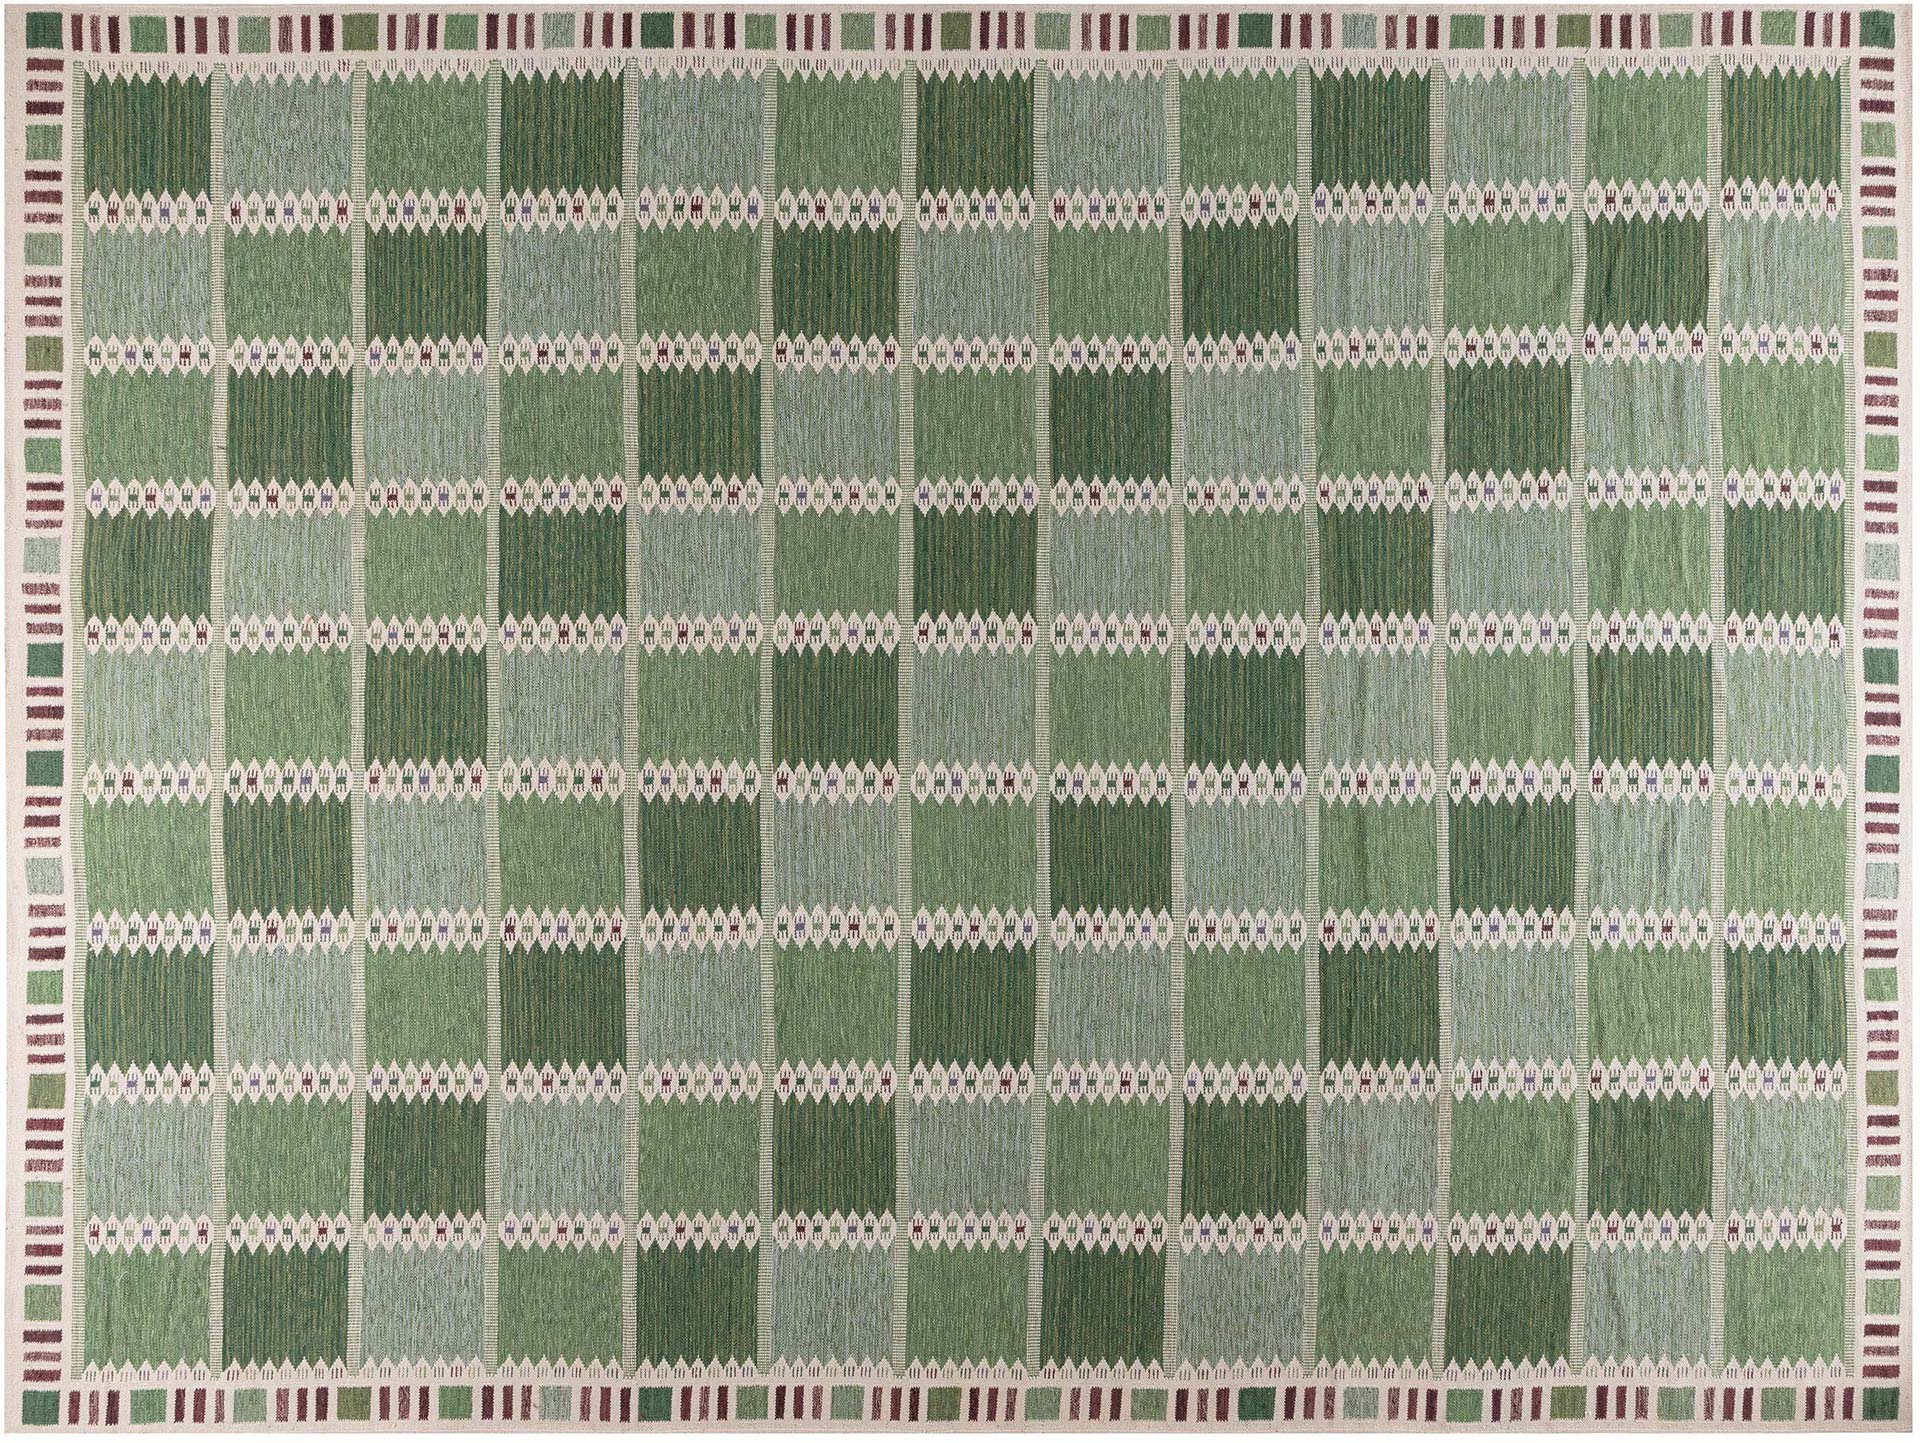 A modern Scandinavian style flatweave in crisp shades of green. Rug size: 14’9” x 20’